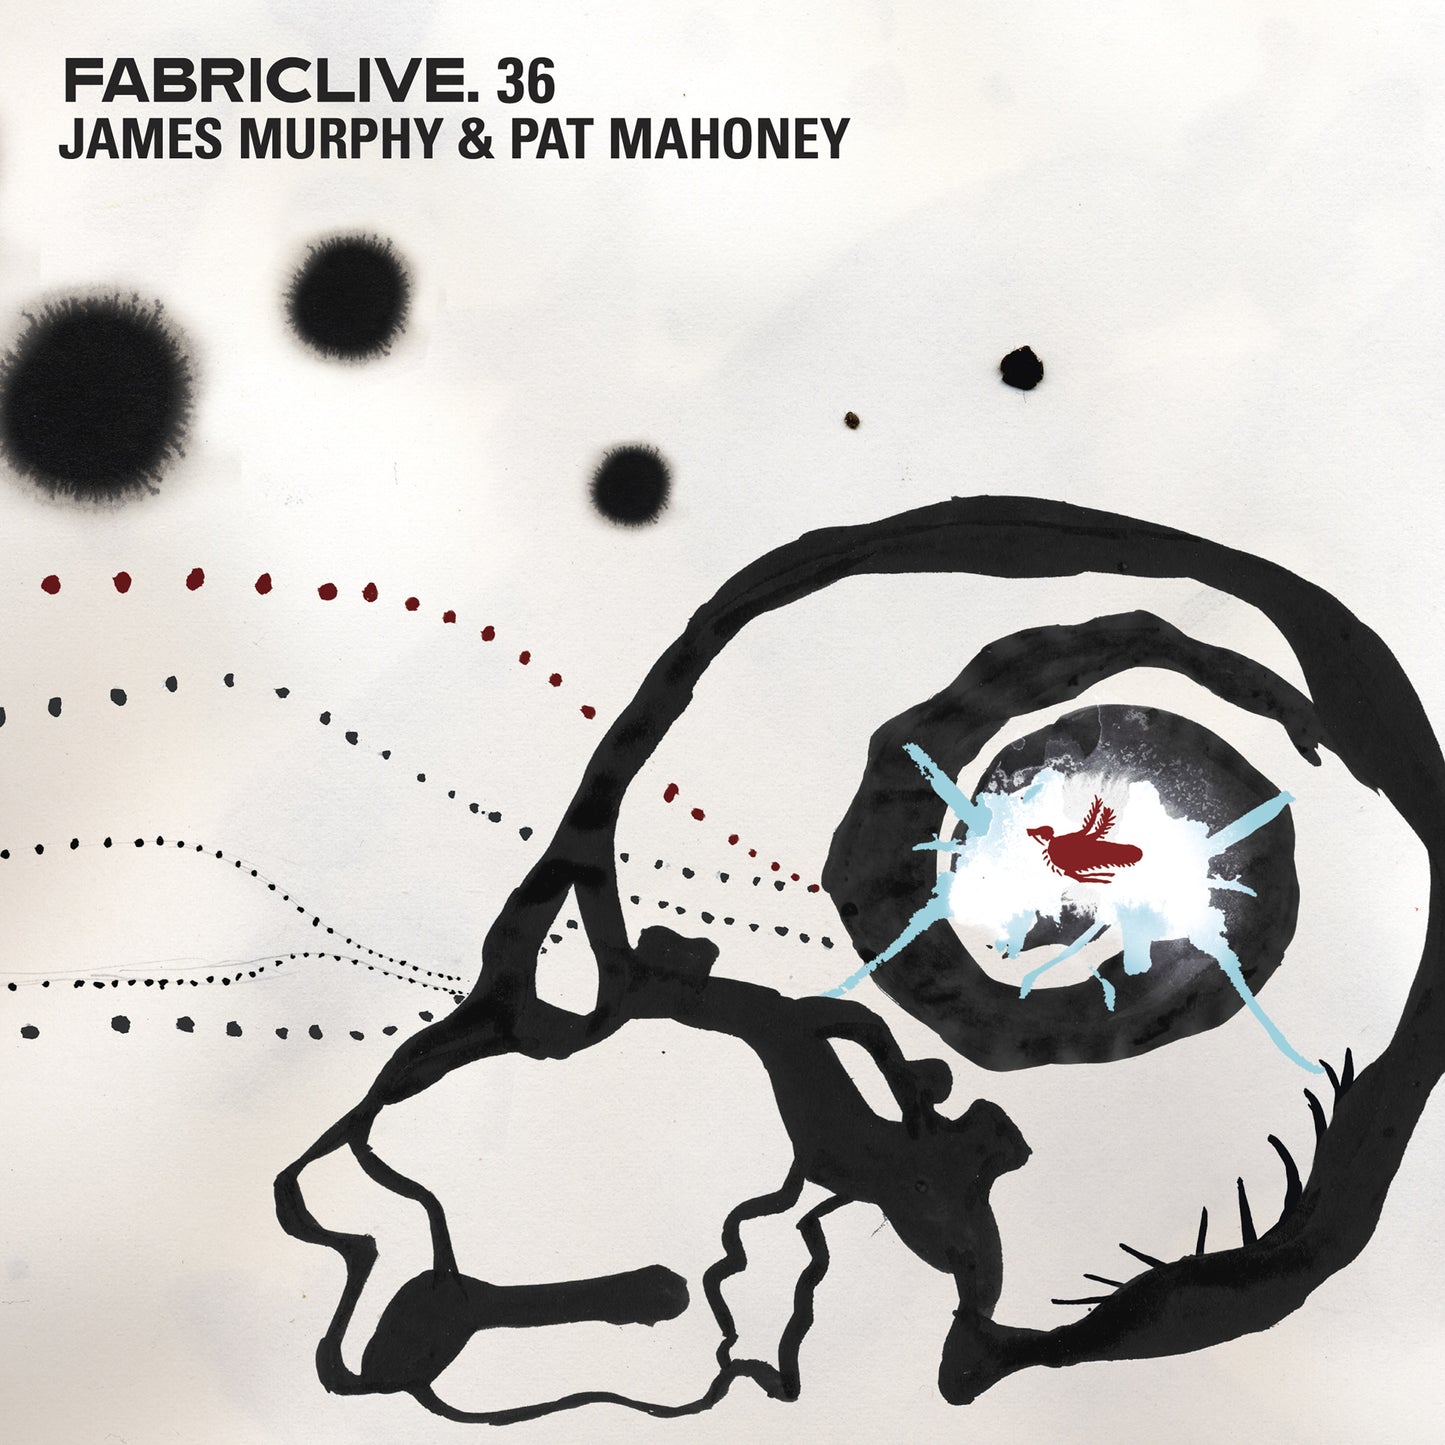 James Murphy & Pat Mahoney - FABRICLIVE 36